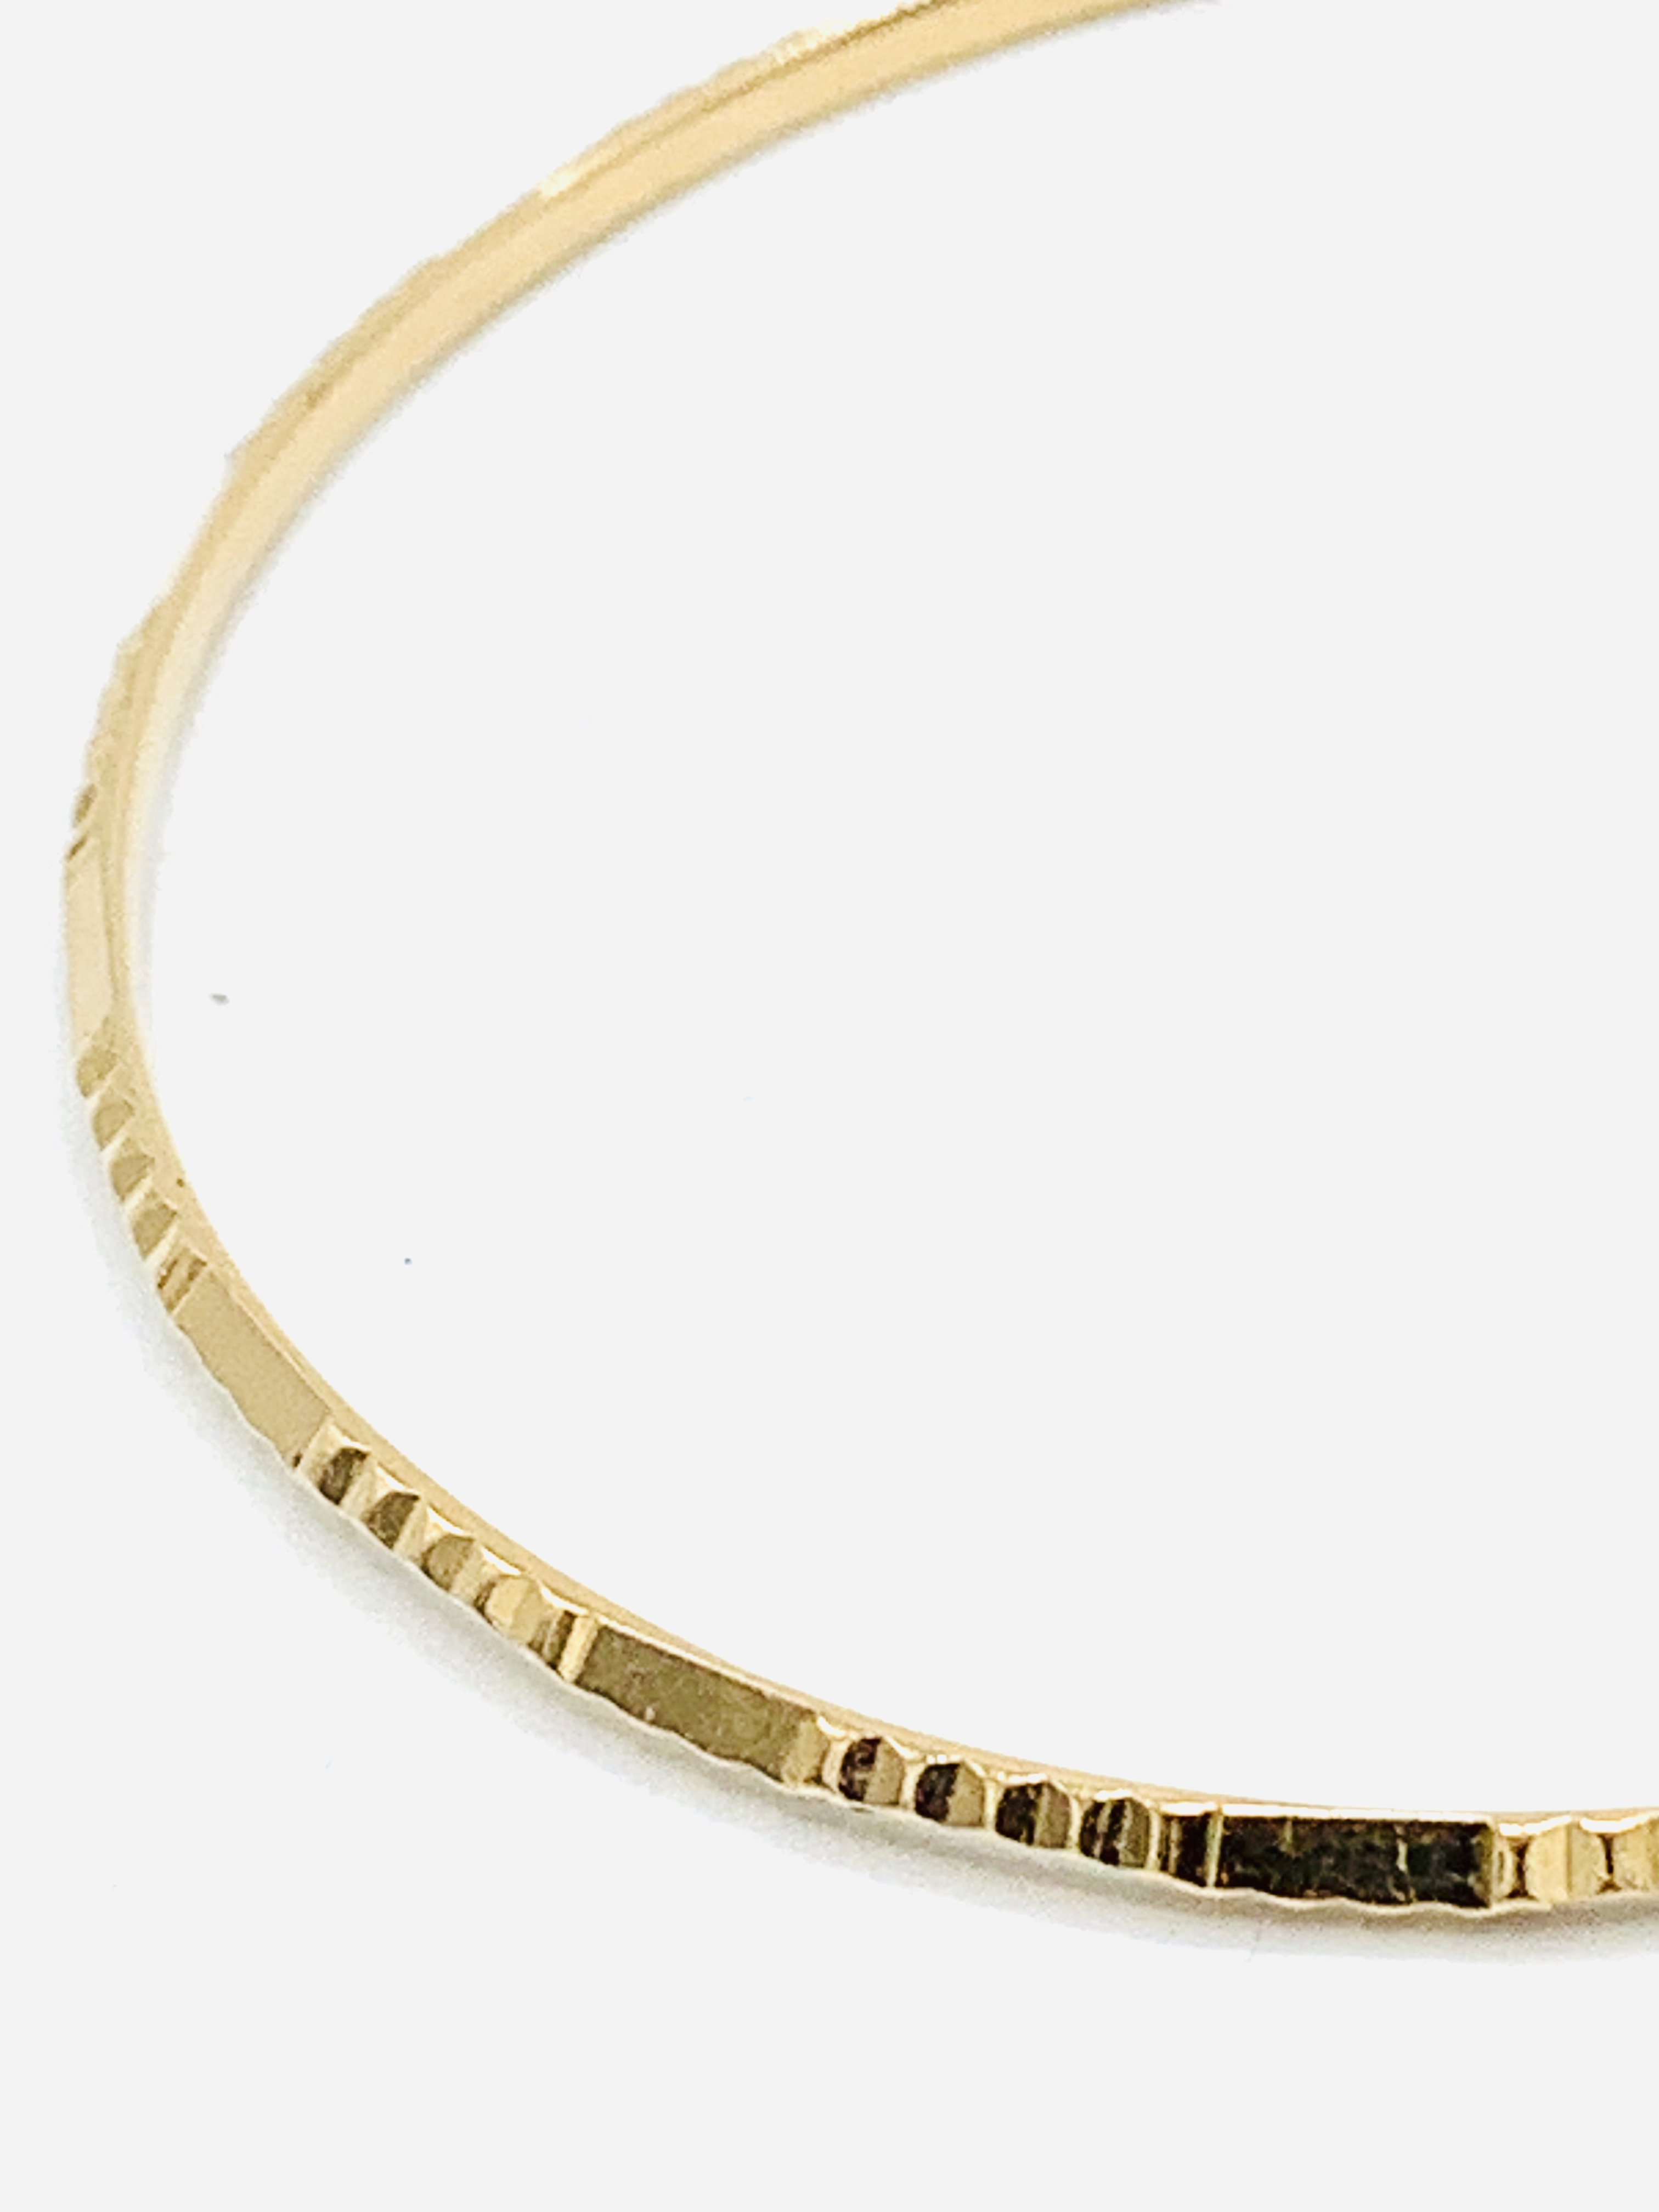 18ct gold bangle. - Image 3 of 4